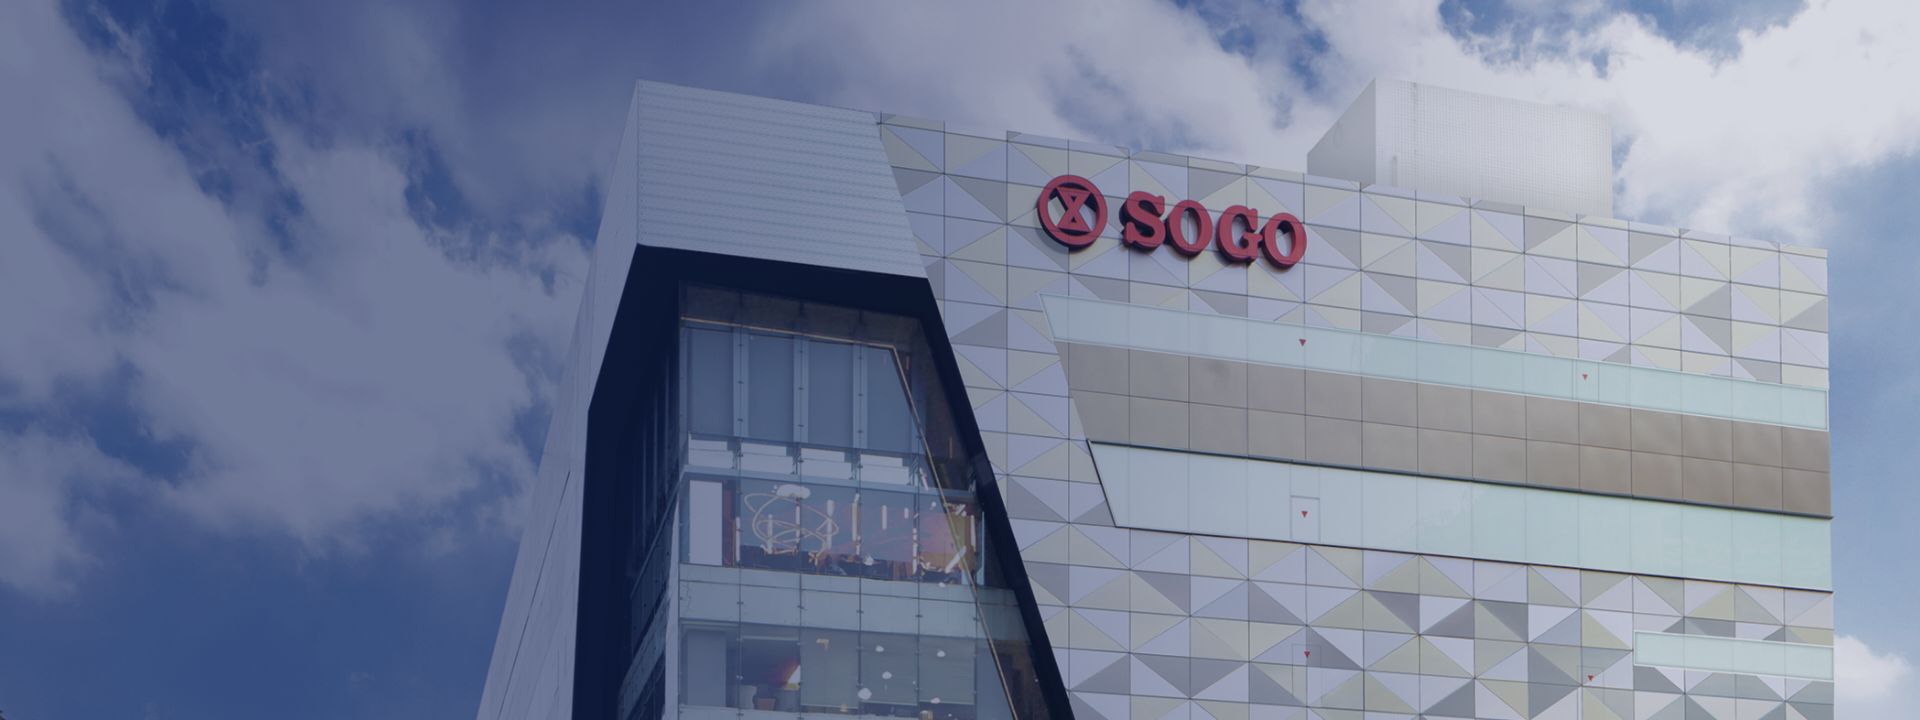 Pacific SOGO  Department Stores Co., Ltd. (FE SOGO)